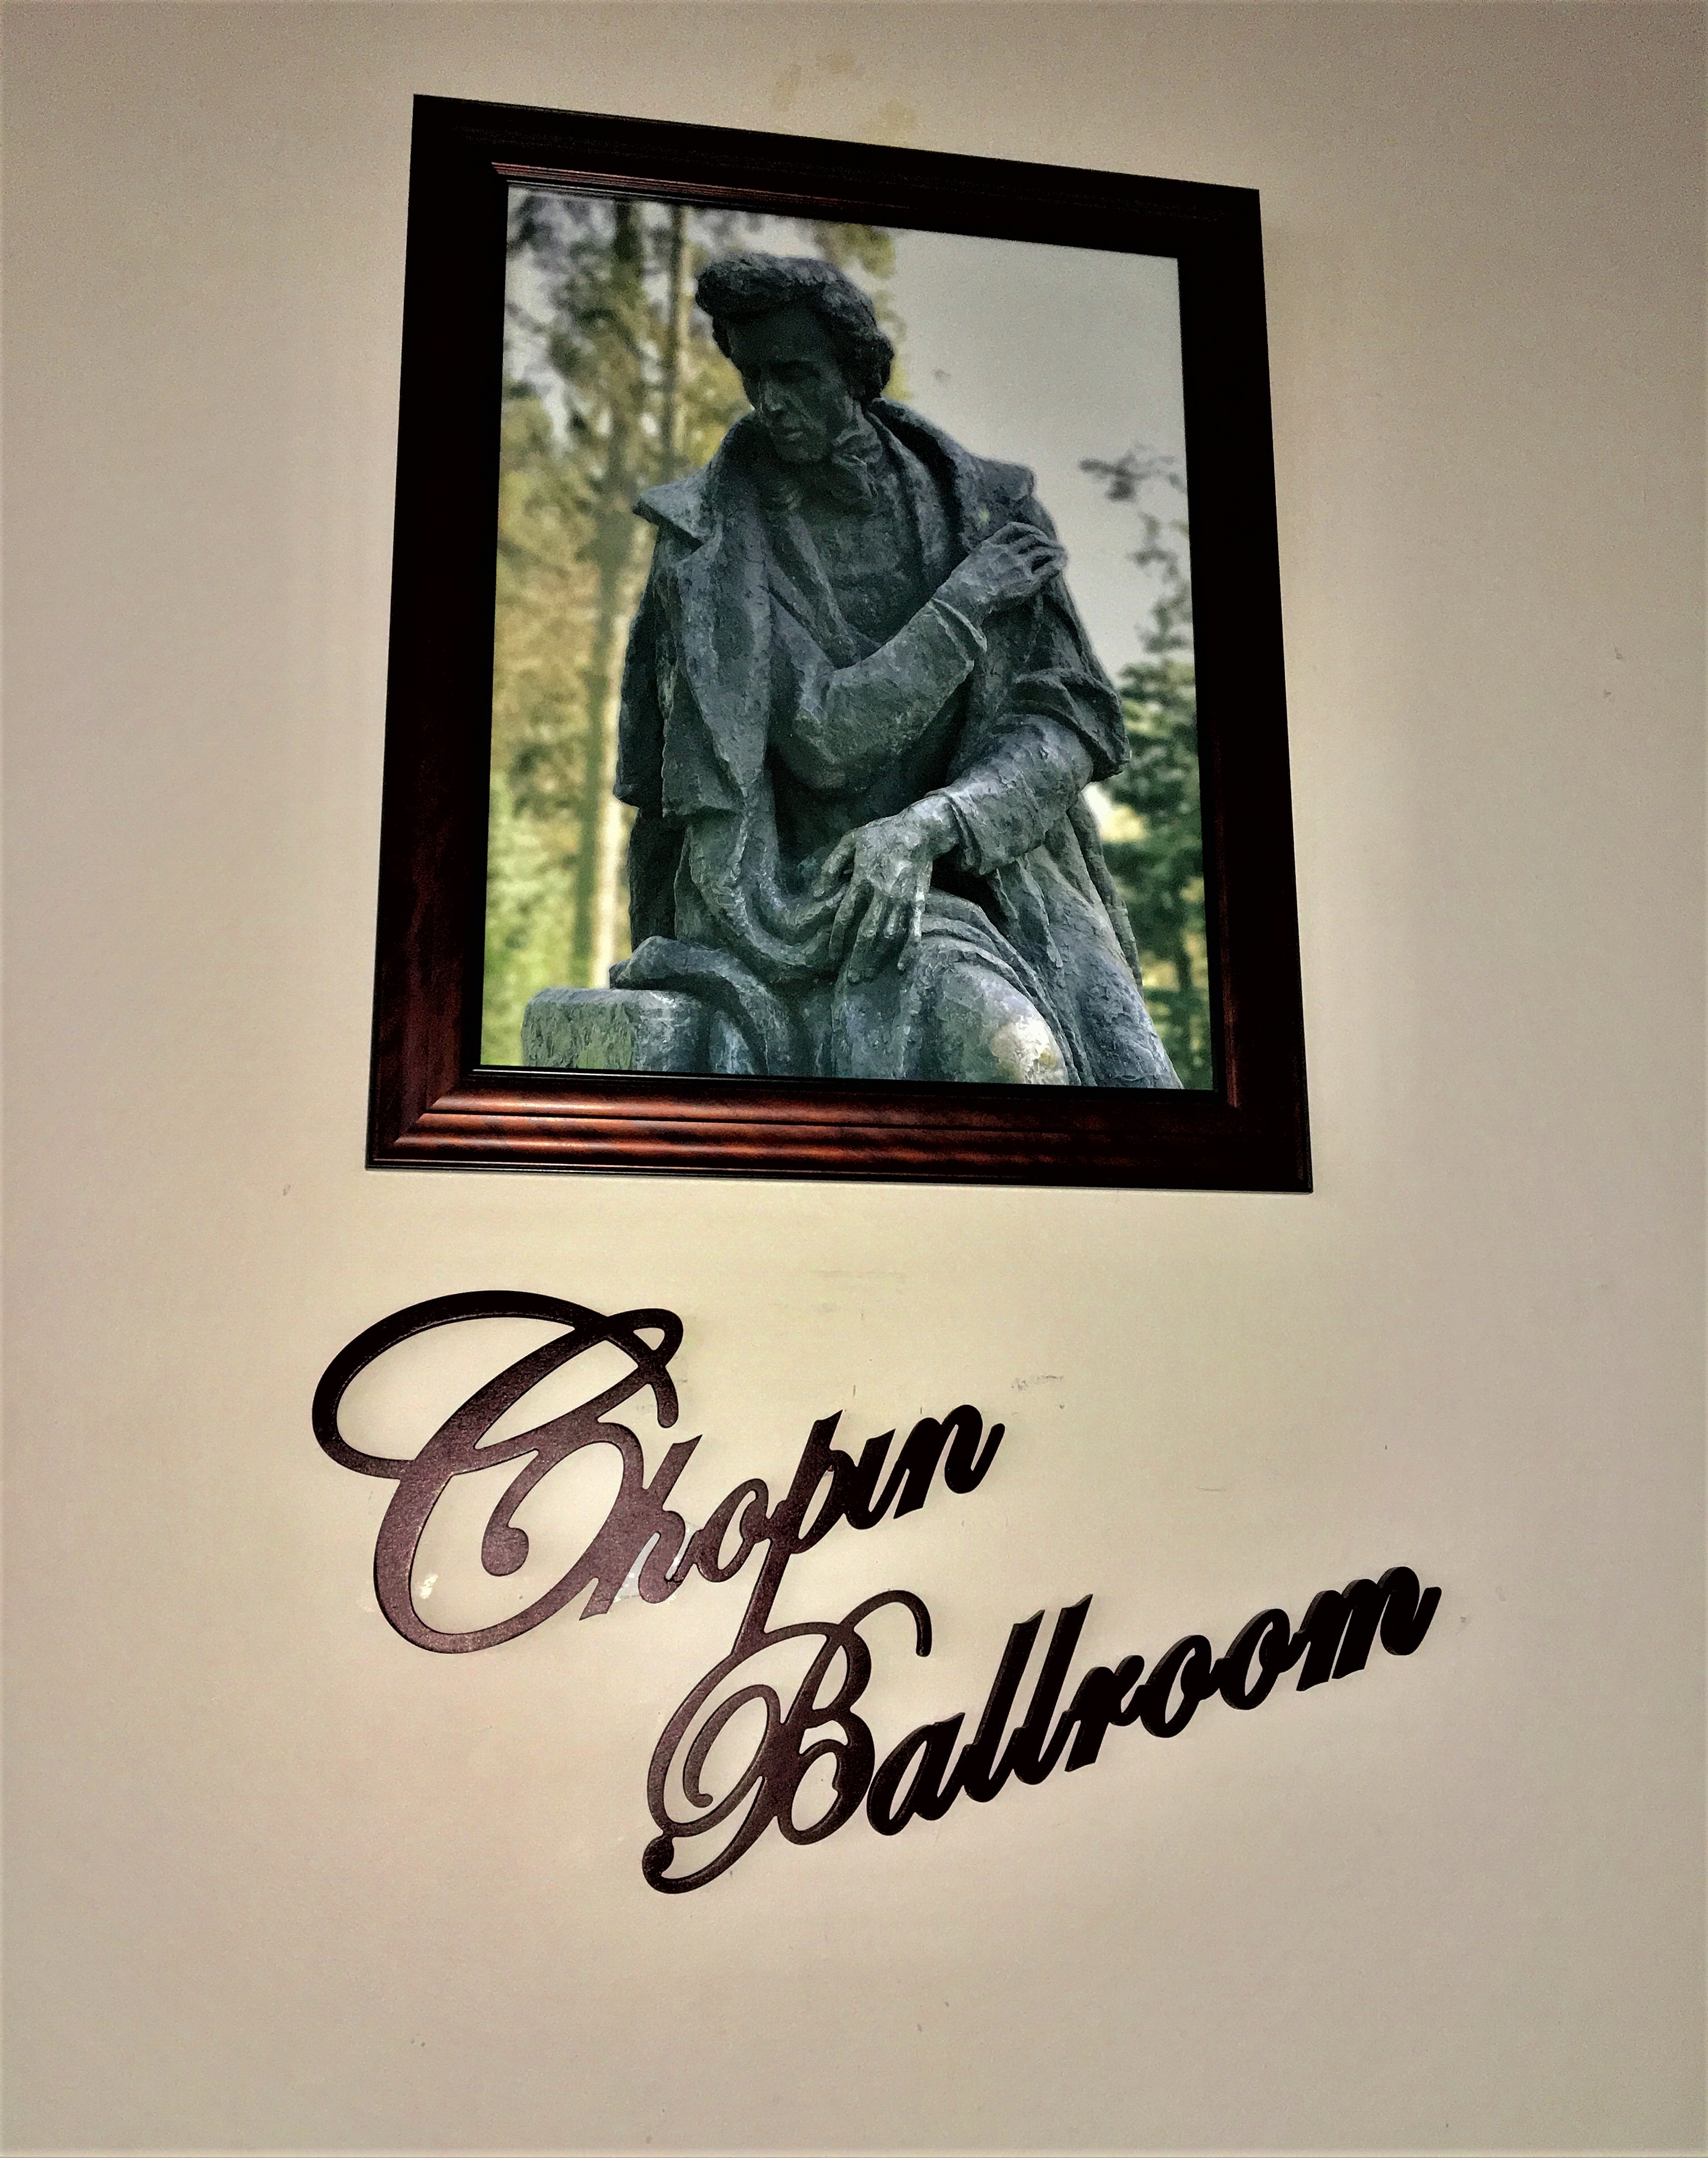 Chopin Ballroom.jpg